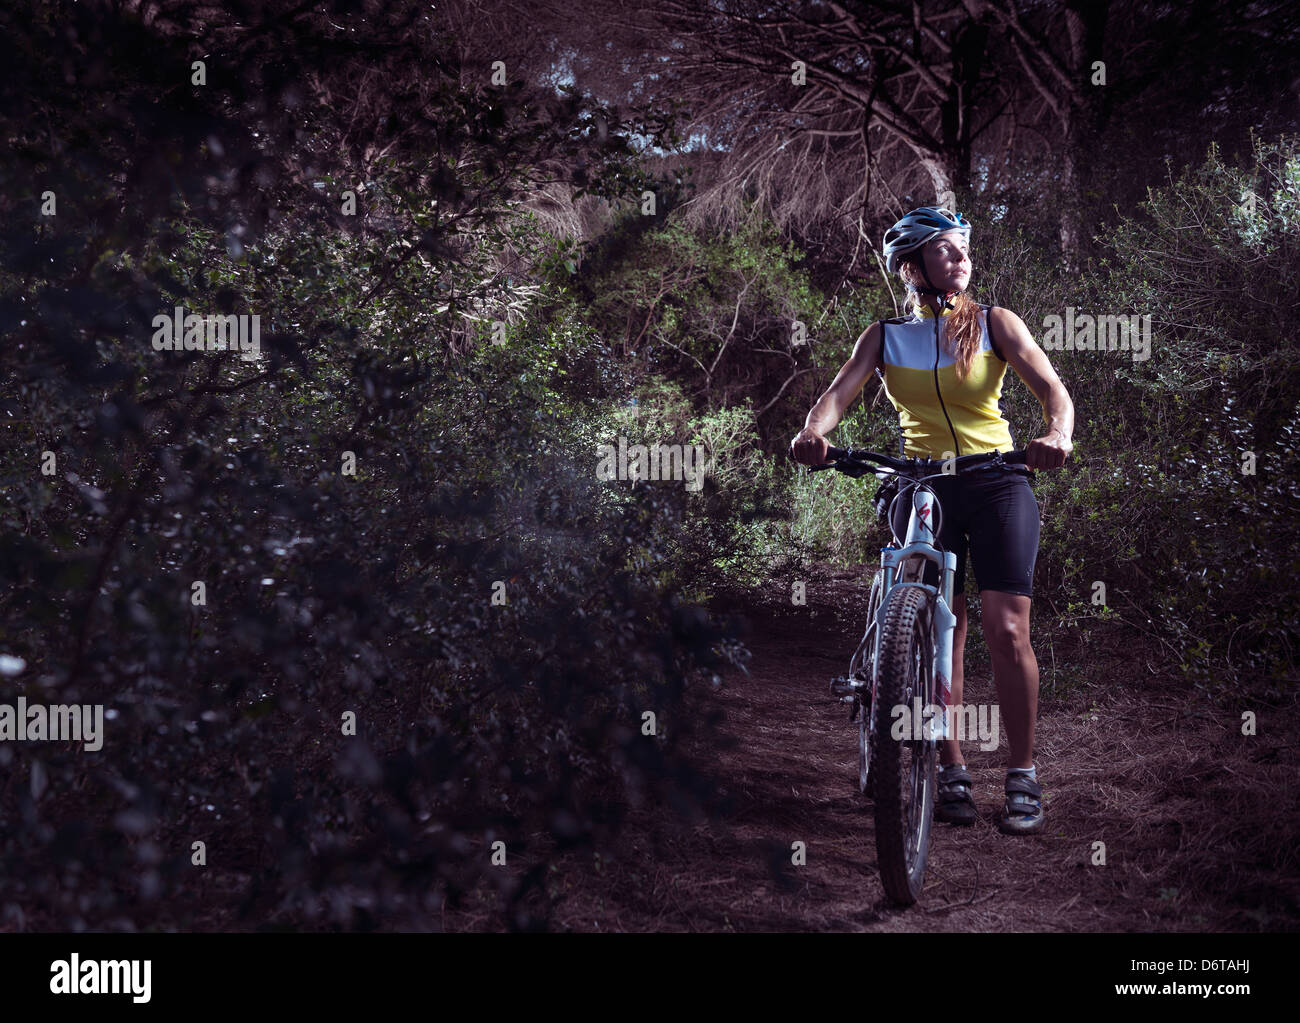 Woman lost in the forest on her mountain bike. Tarifa, Costa de la Luz, Cadiz, Andalusia, Spain, Europe. Stock Photo